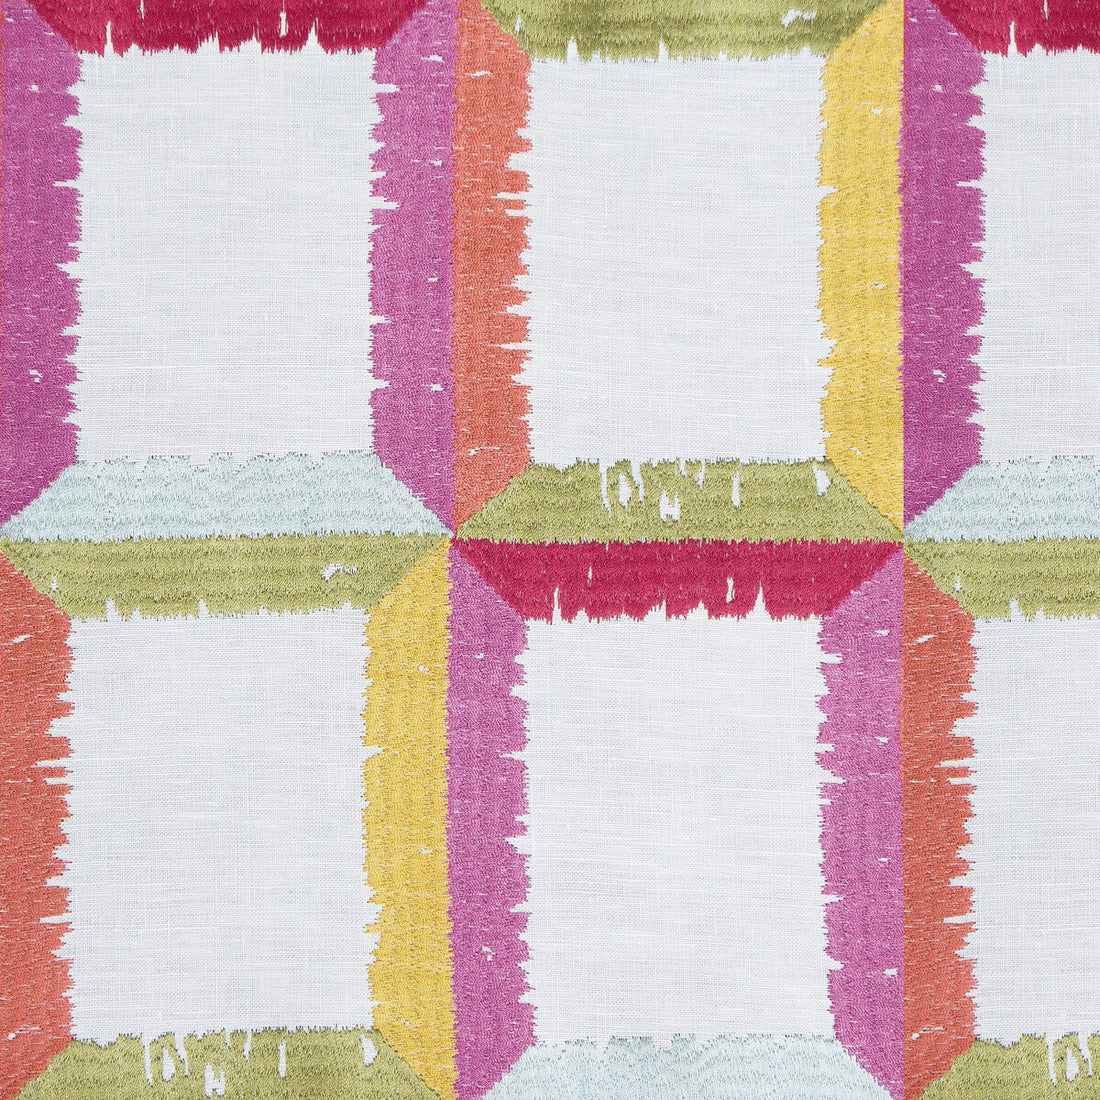 Yucatan fabric in rosa/verde color - pattern GDT5563.001.0 - by Gaston y Daniela in the Gaston Nuevo Mundo collection